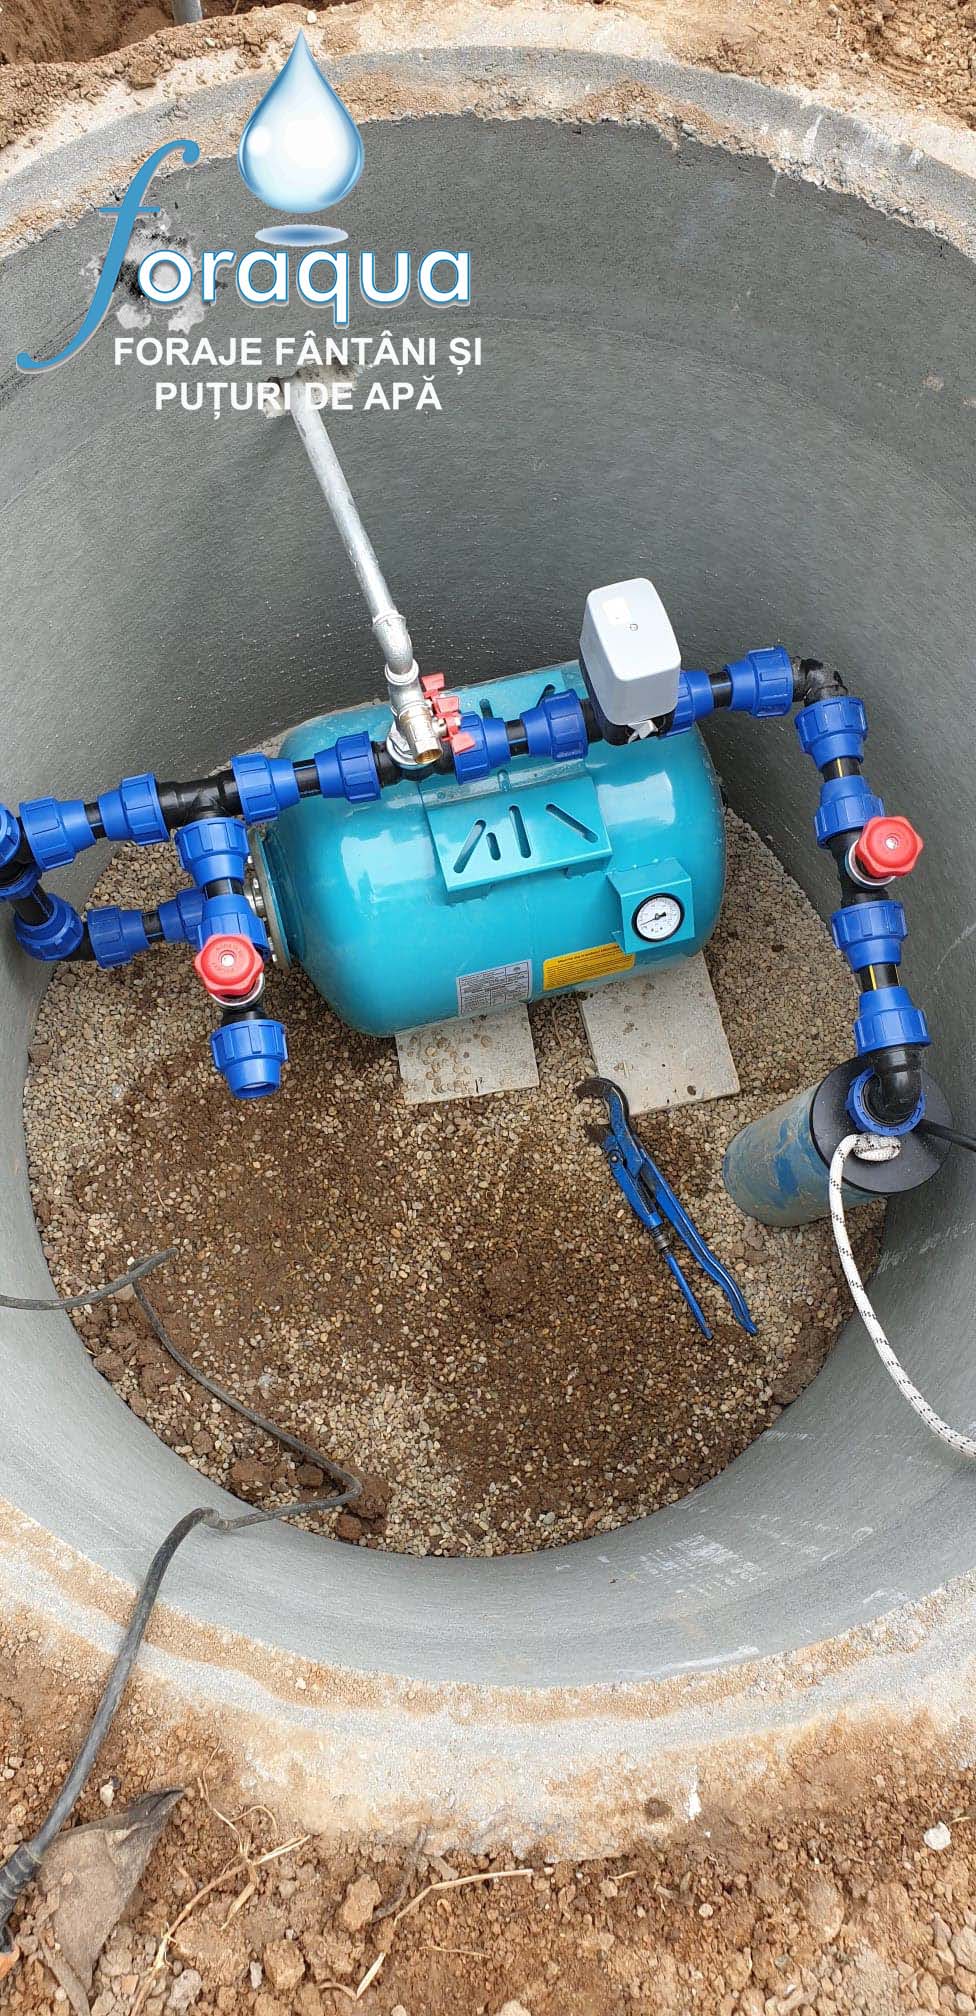 Sea slug Cooperative mesh Furnizari si instalari pompe submersibile – Foraqua